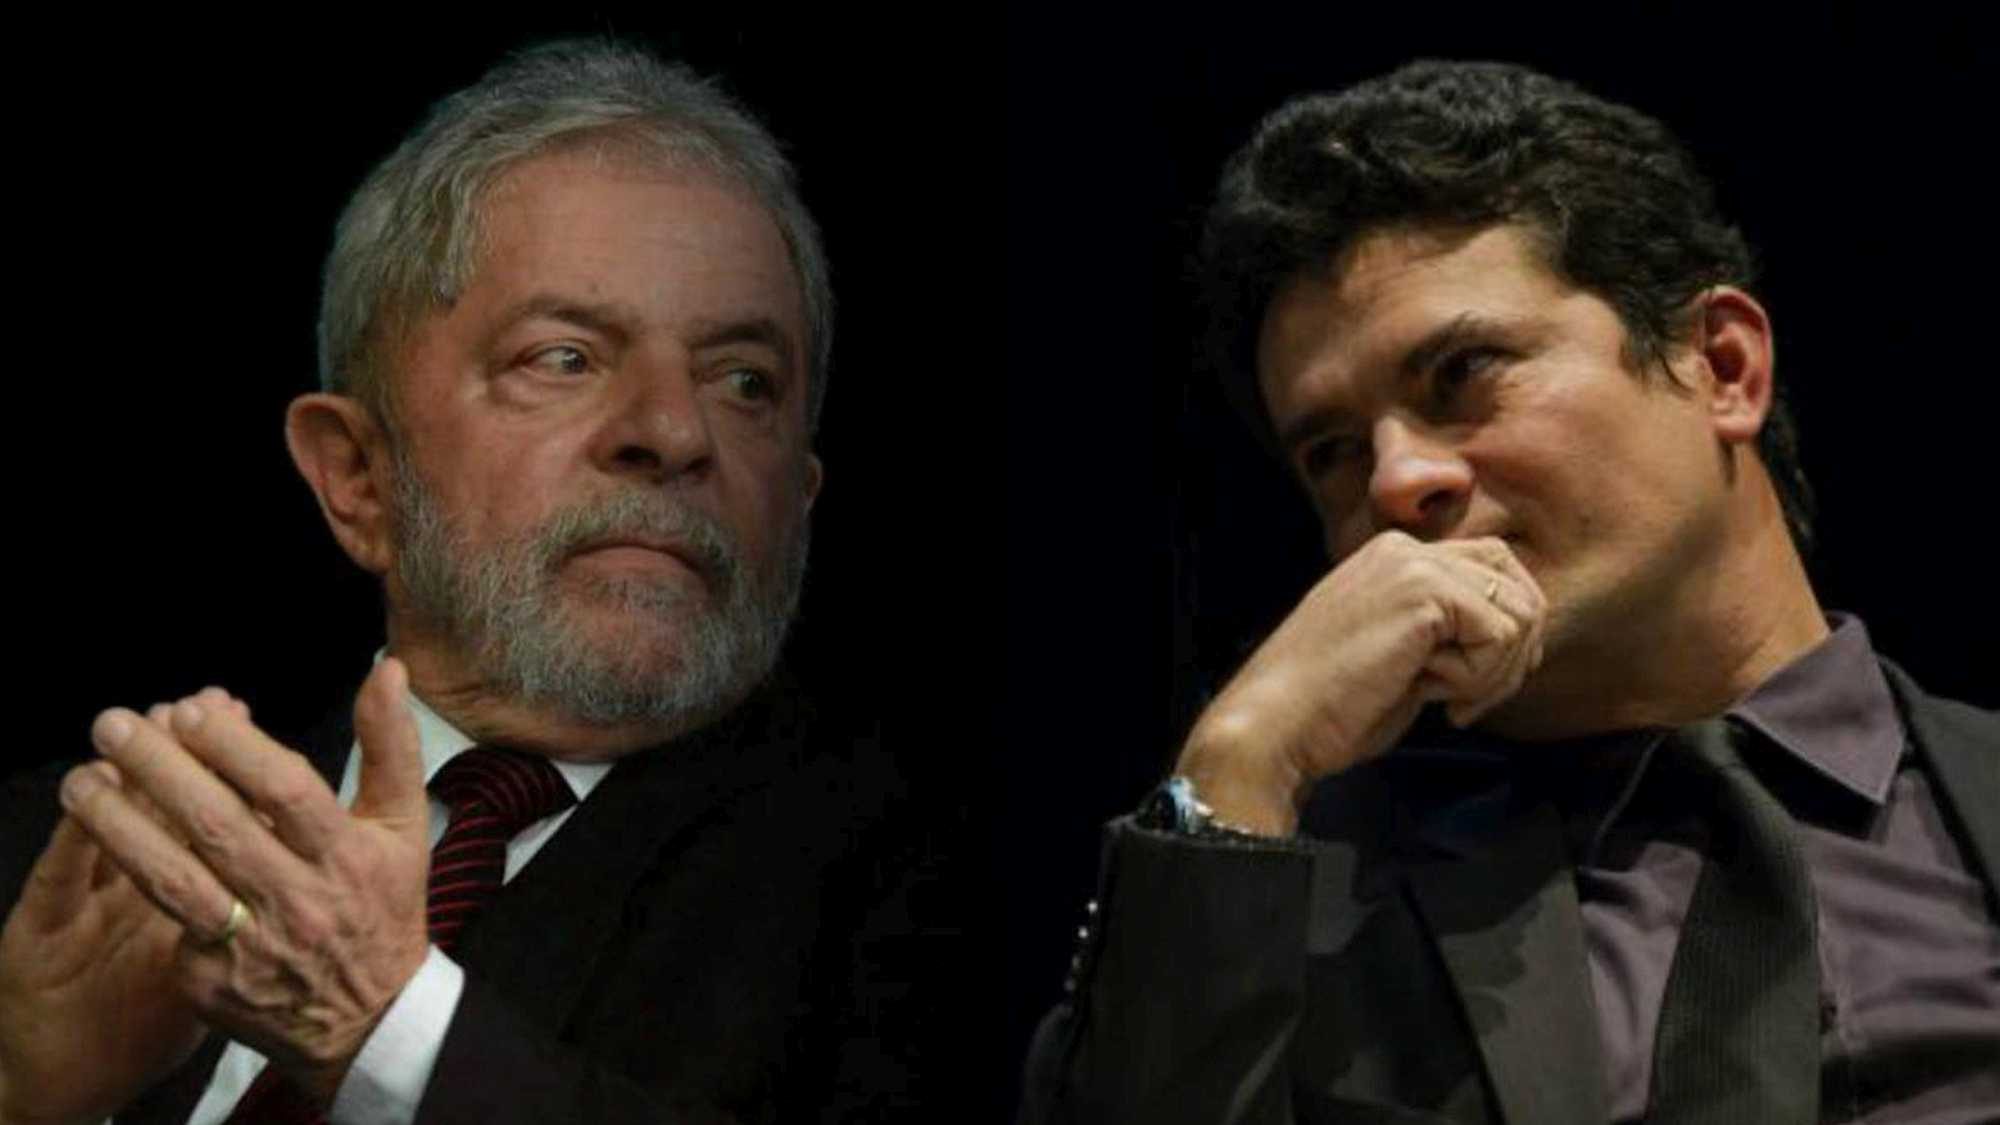 Former president Lula and judge Sergio Moro